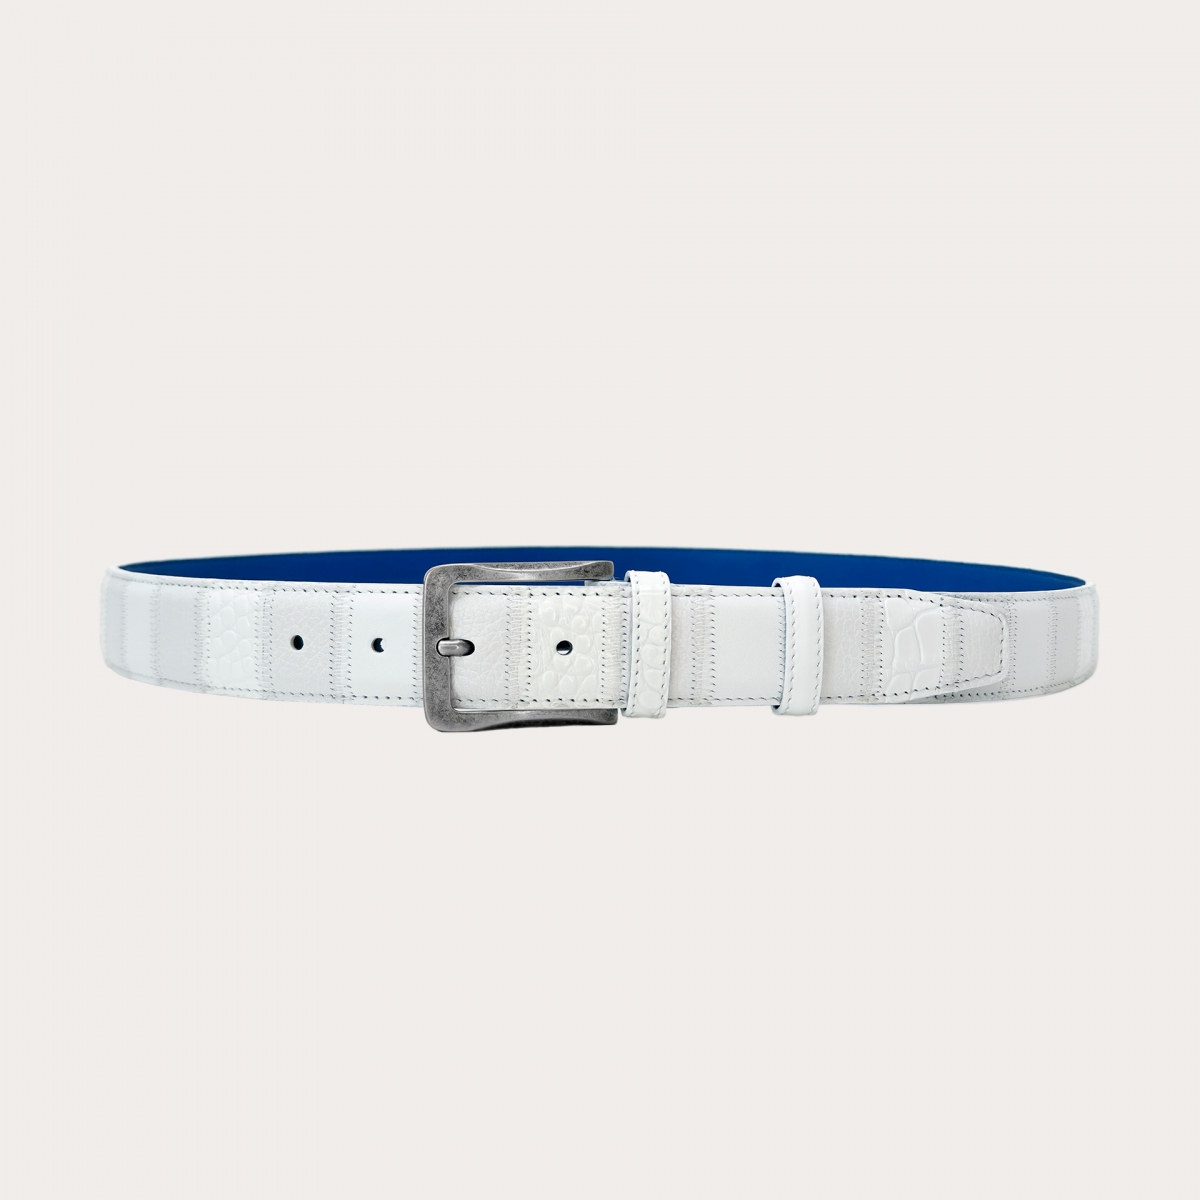 Exclusive white belt in patchwork design